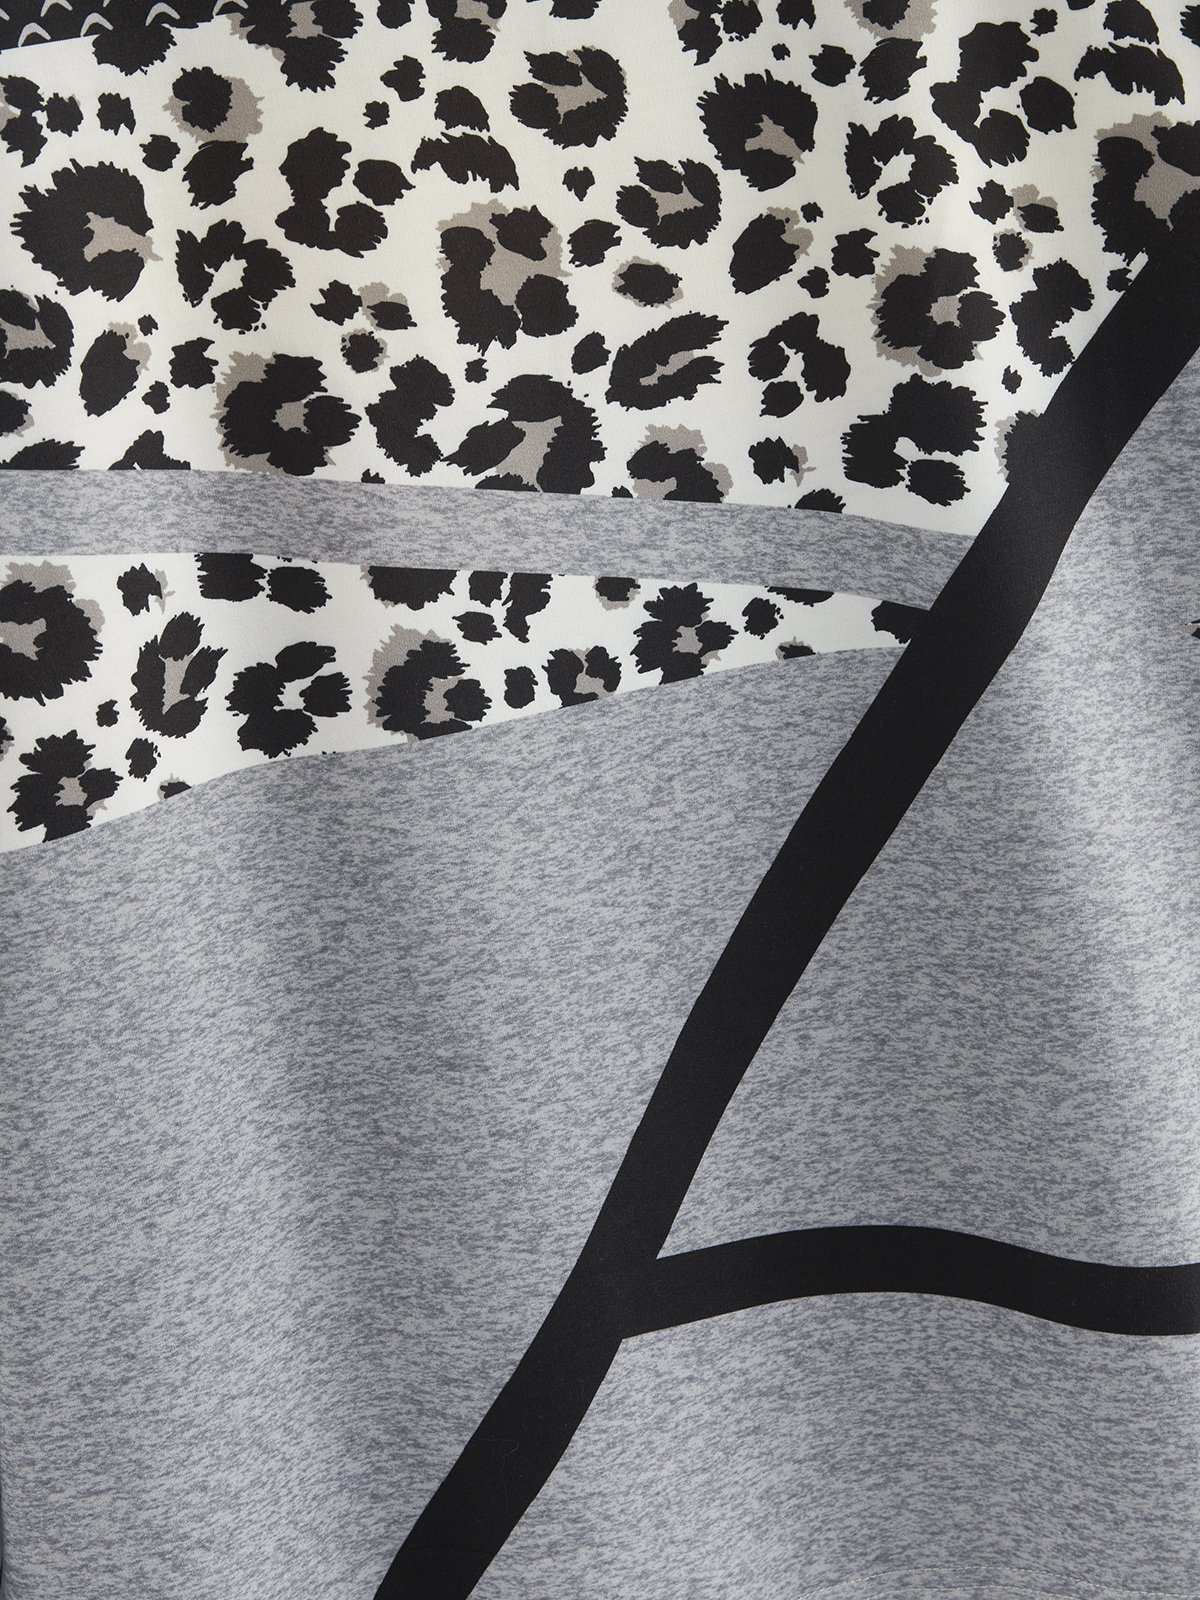 Women's Trendy Fashion Leopard Print Long Sleeve Shirt Crewneck Top Temperament Commuter Pullover Top